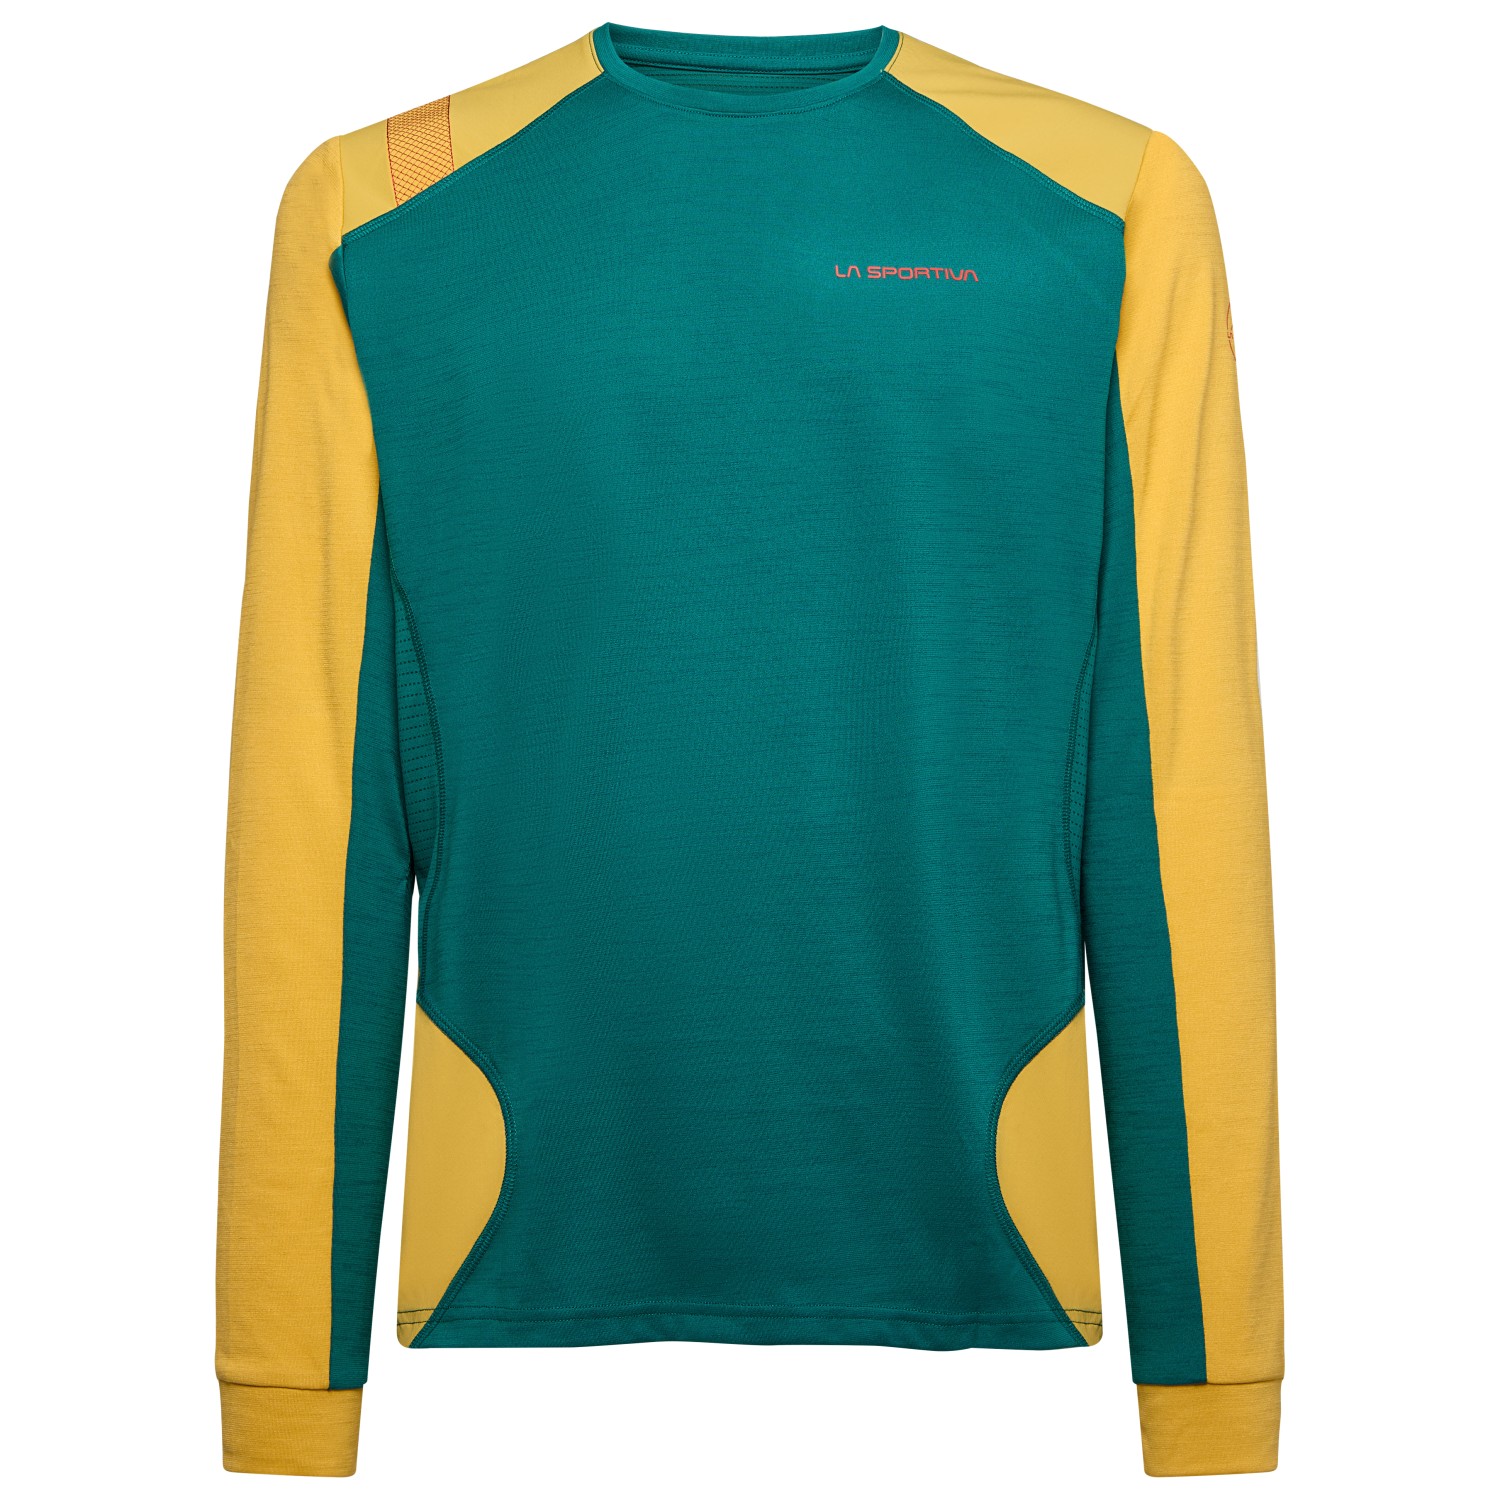 Функциональная рубашка La Sportiva Beyond Long Sleeve, цвет Everglade/Bamboo